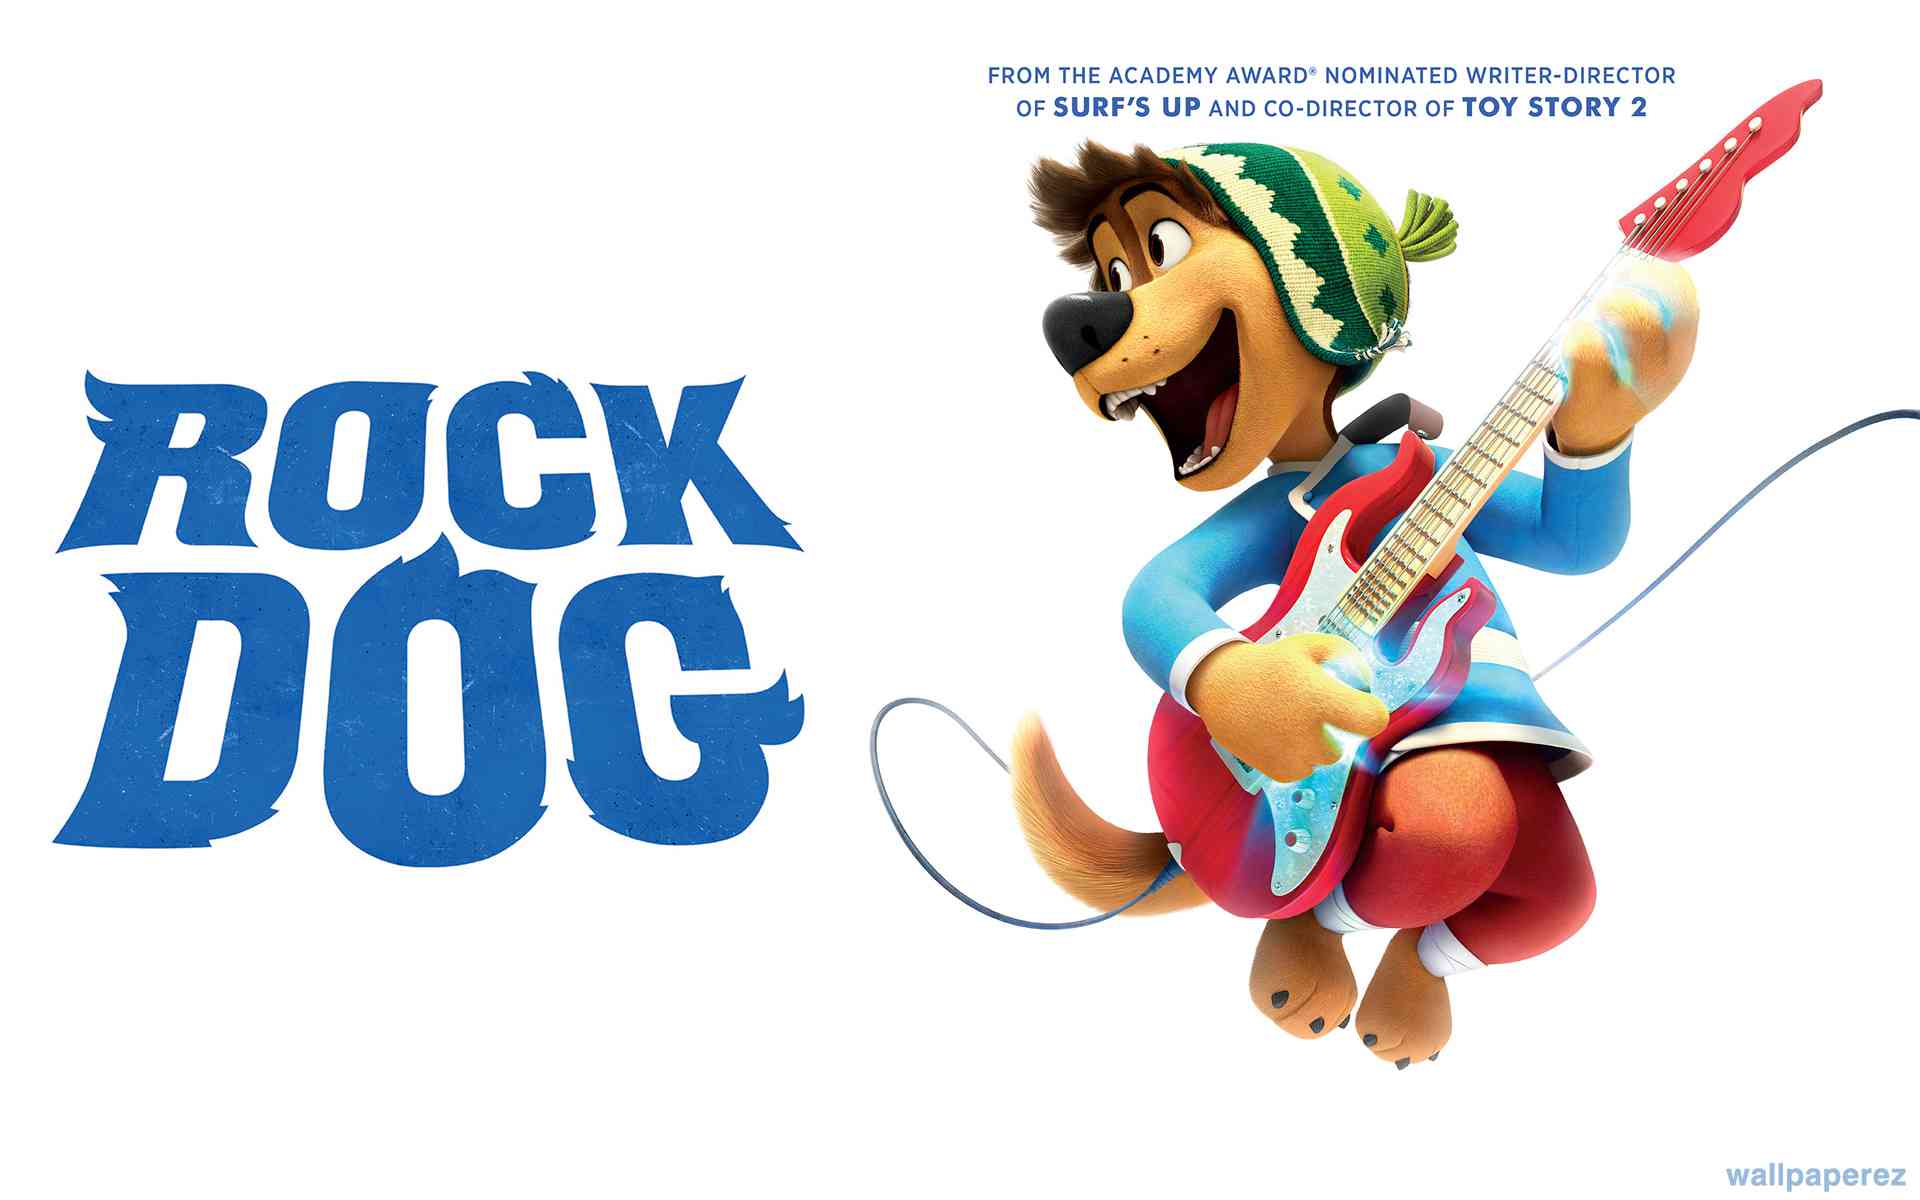 Rock Dog Movie info